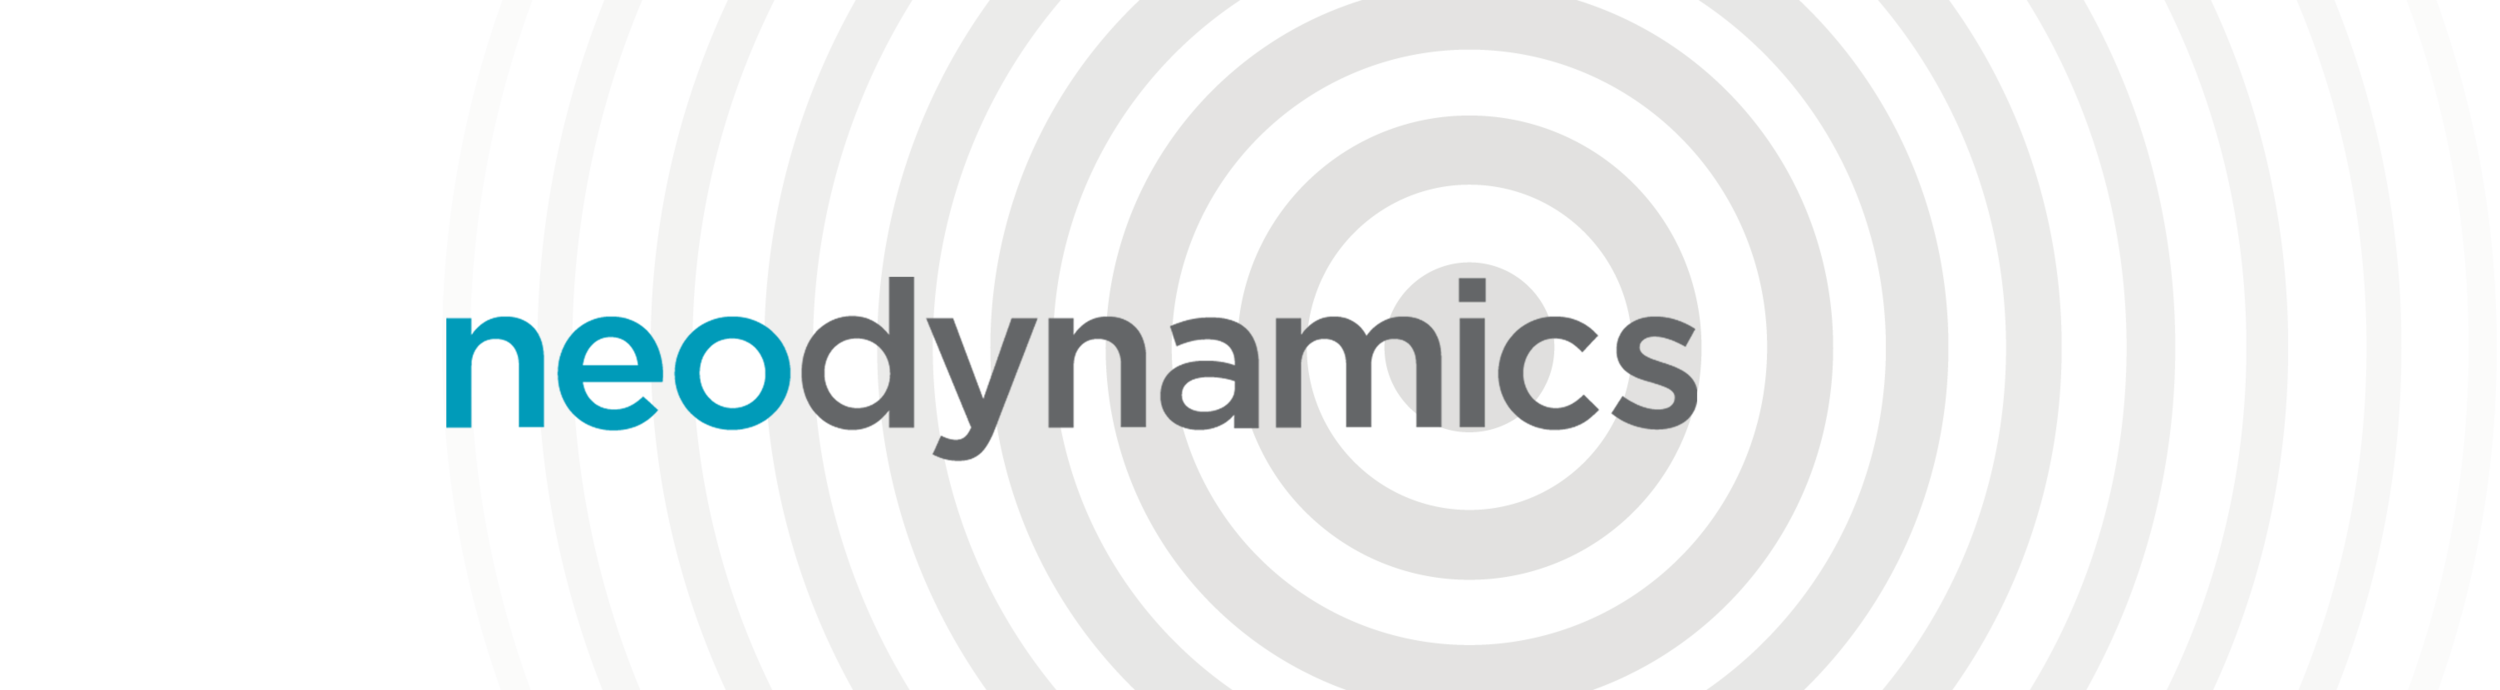 Neodynamics_logo_Circles_2.png